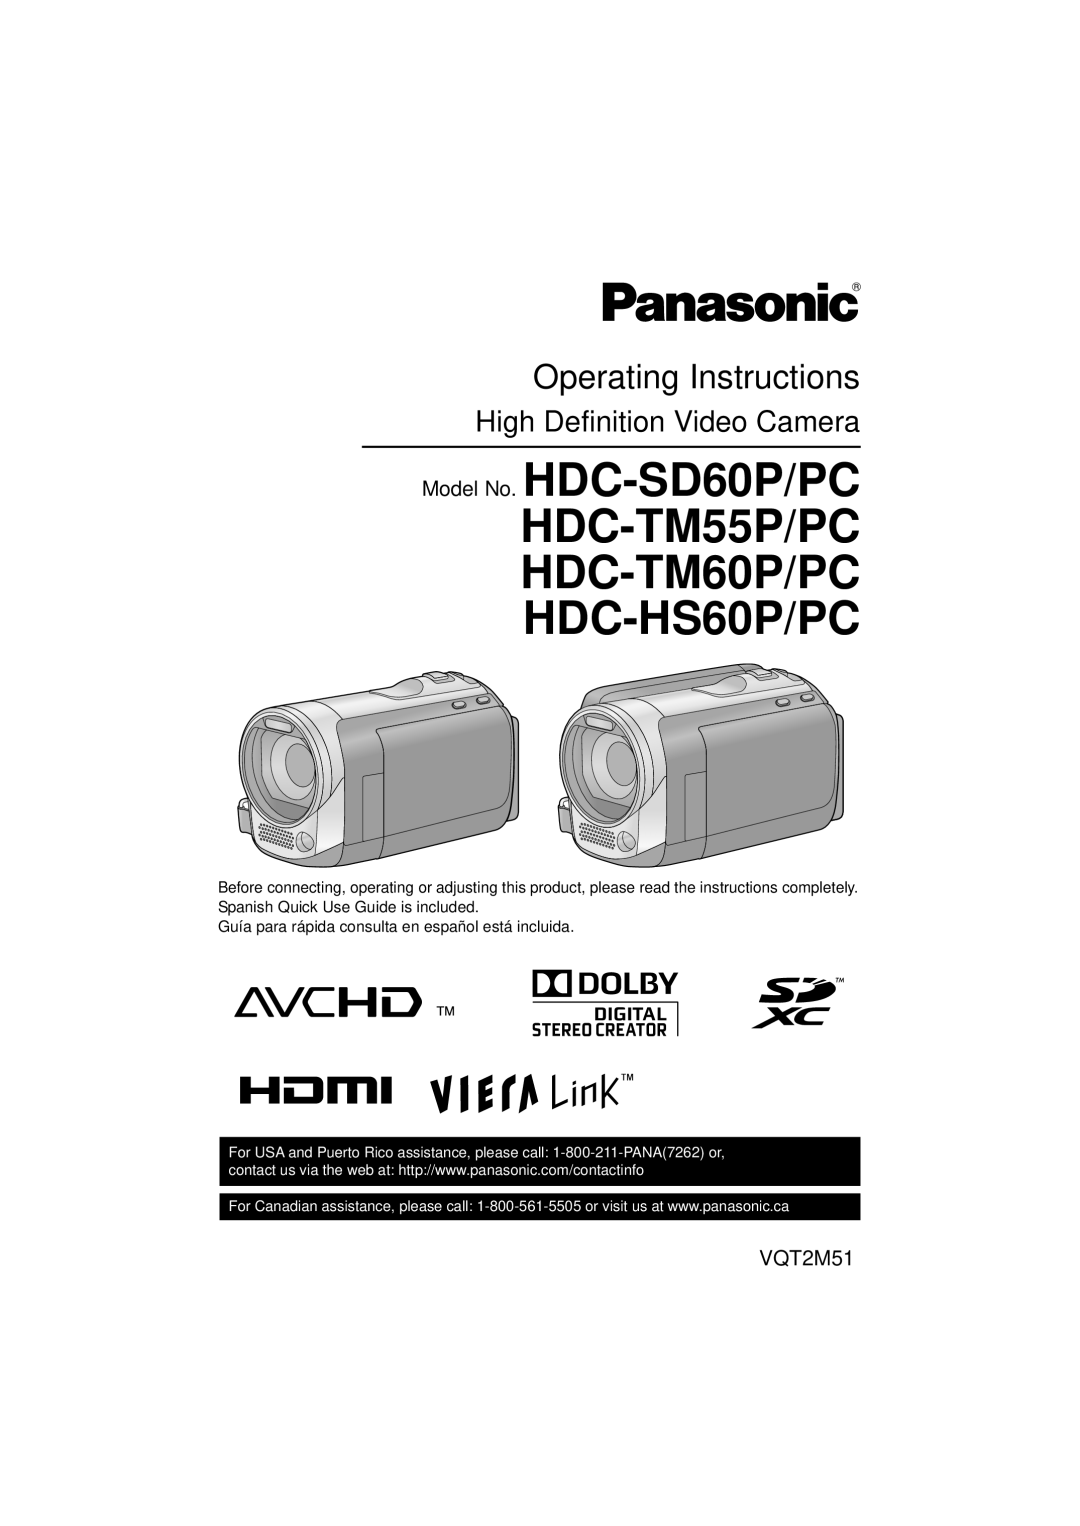 Panasonic operating instructions VQT2M51, Model No. HDC-SD60P/PC HDC-TM55P/PC HDC-TM60P/PC HDC-HS60P/PC 